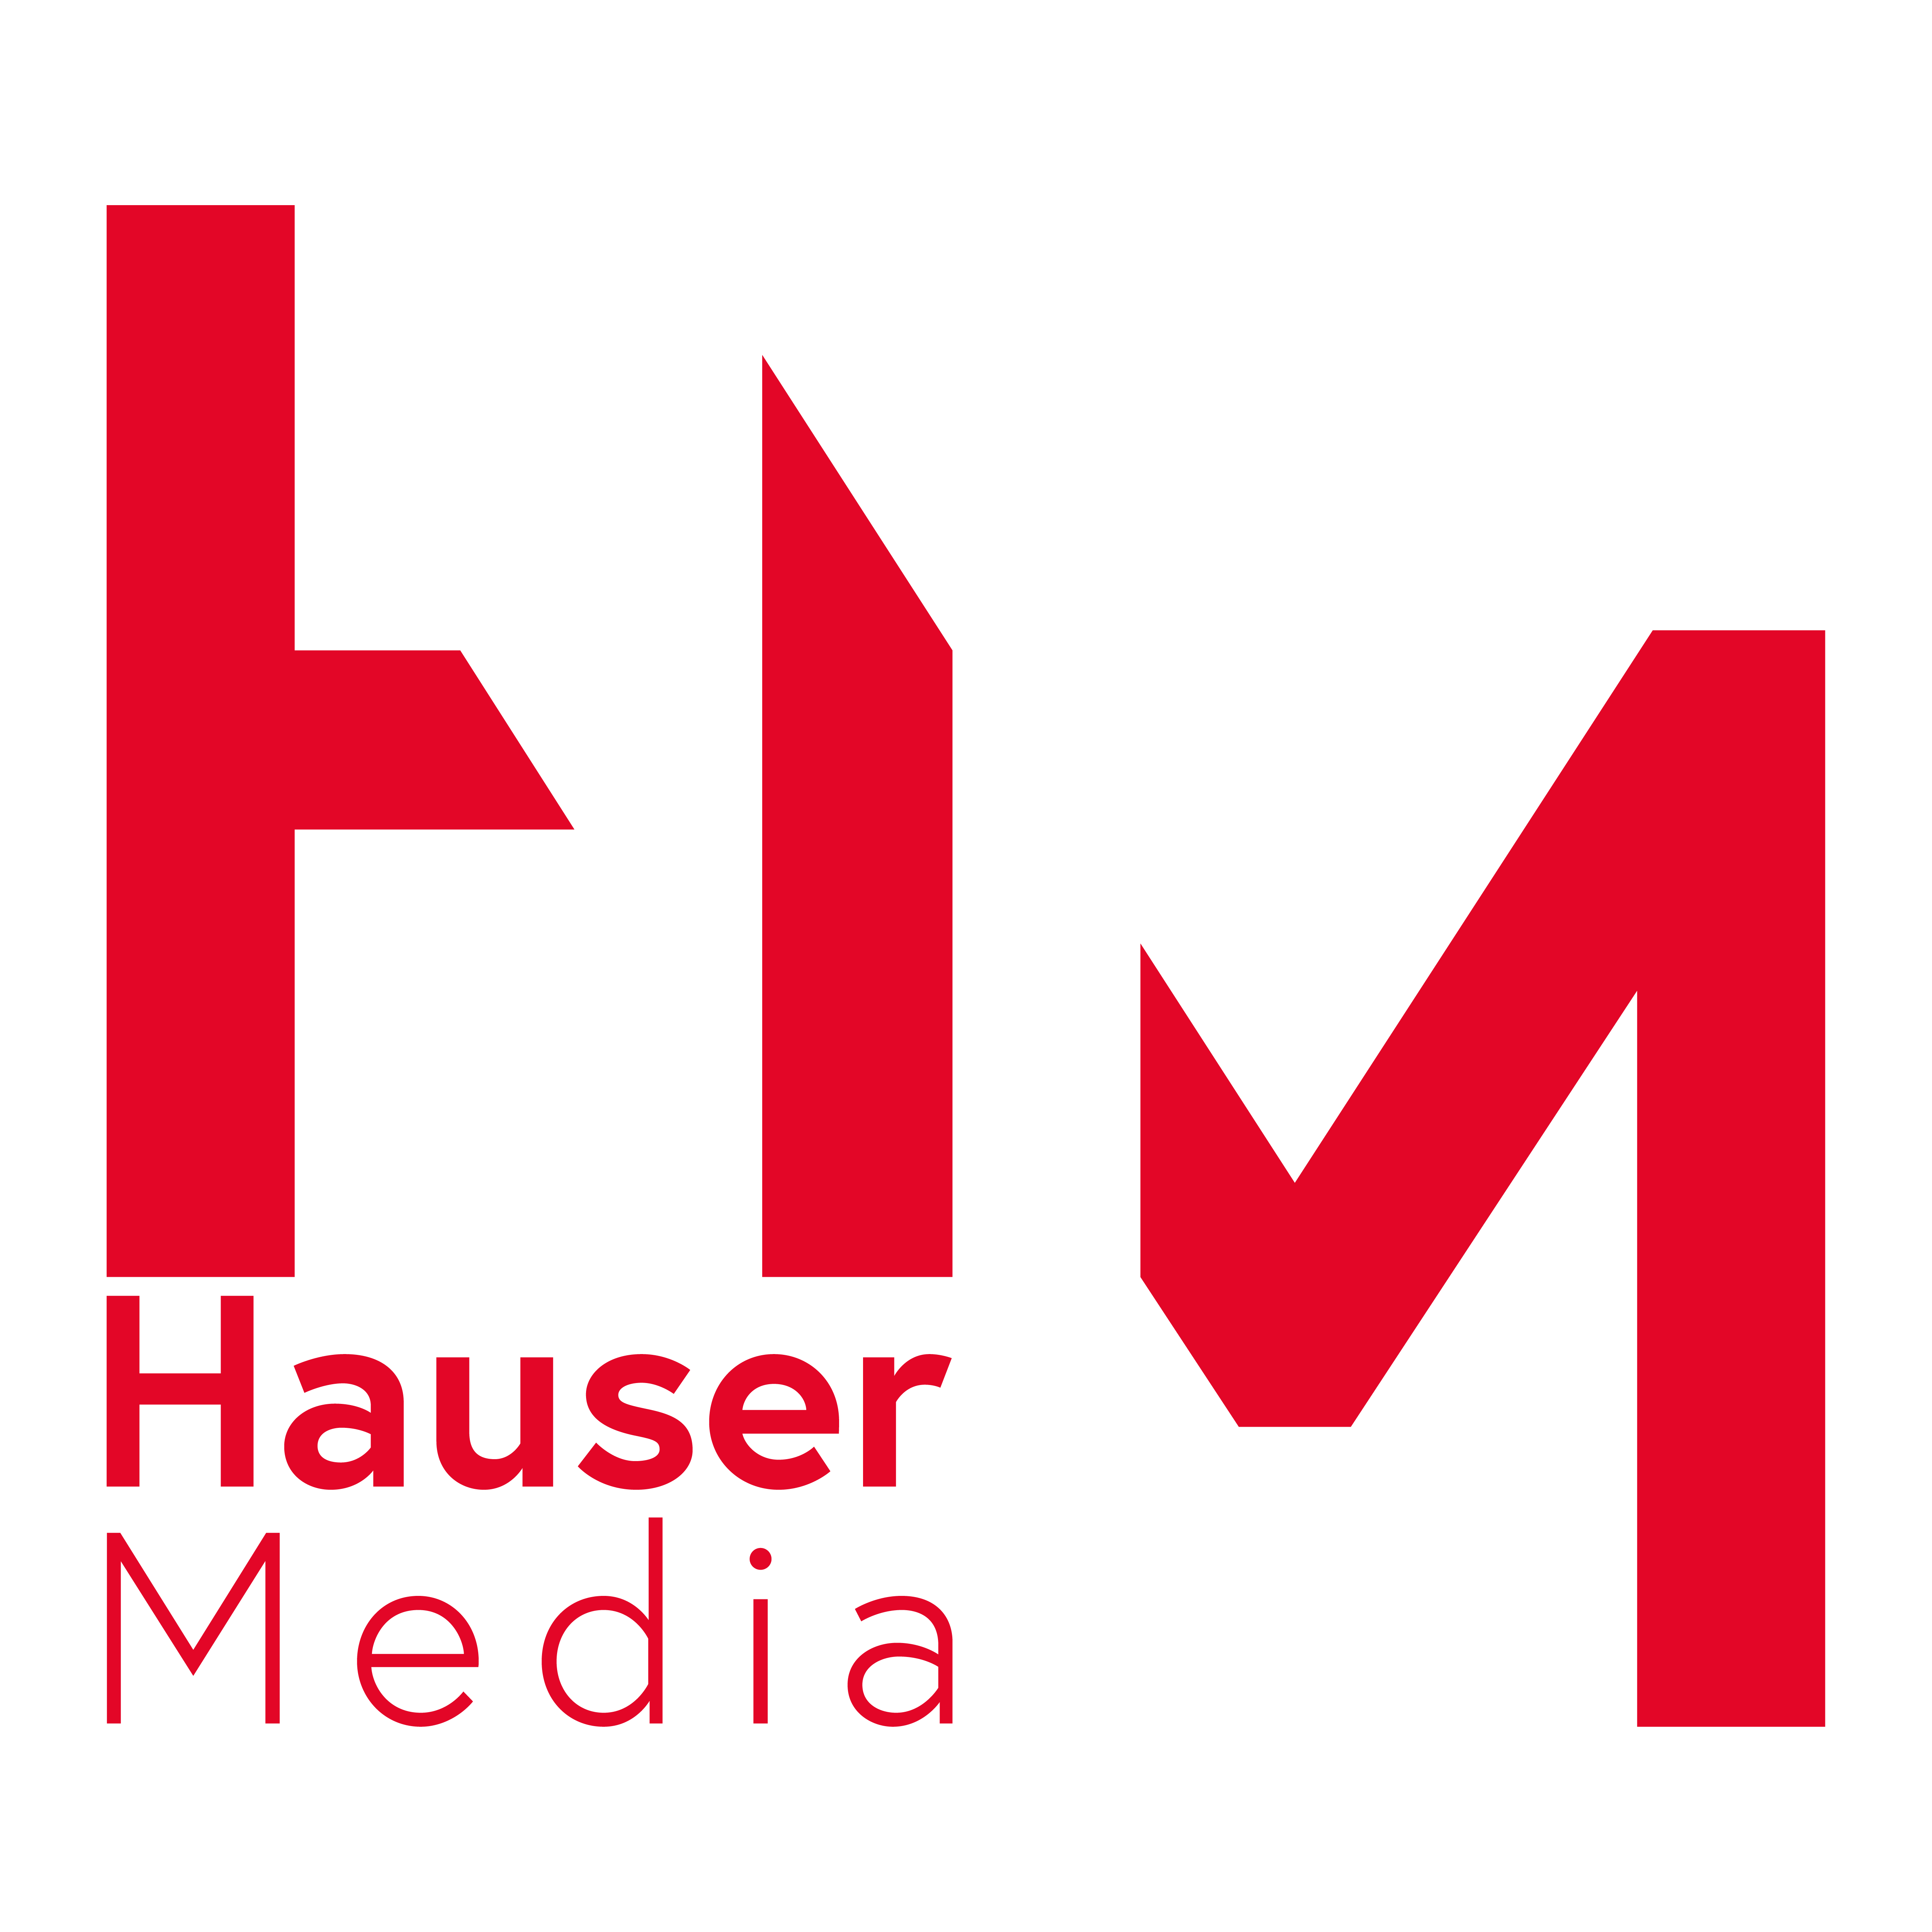 Hauser Media